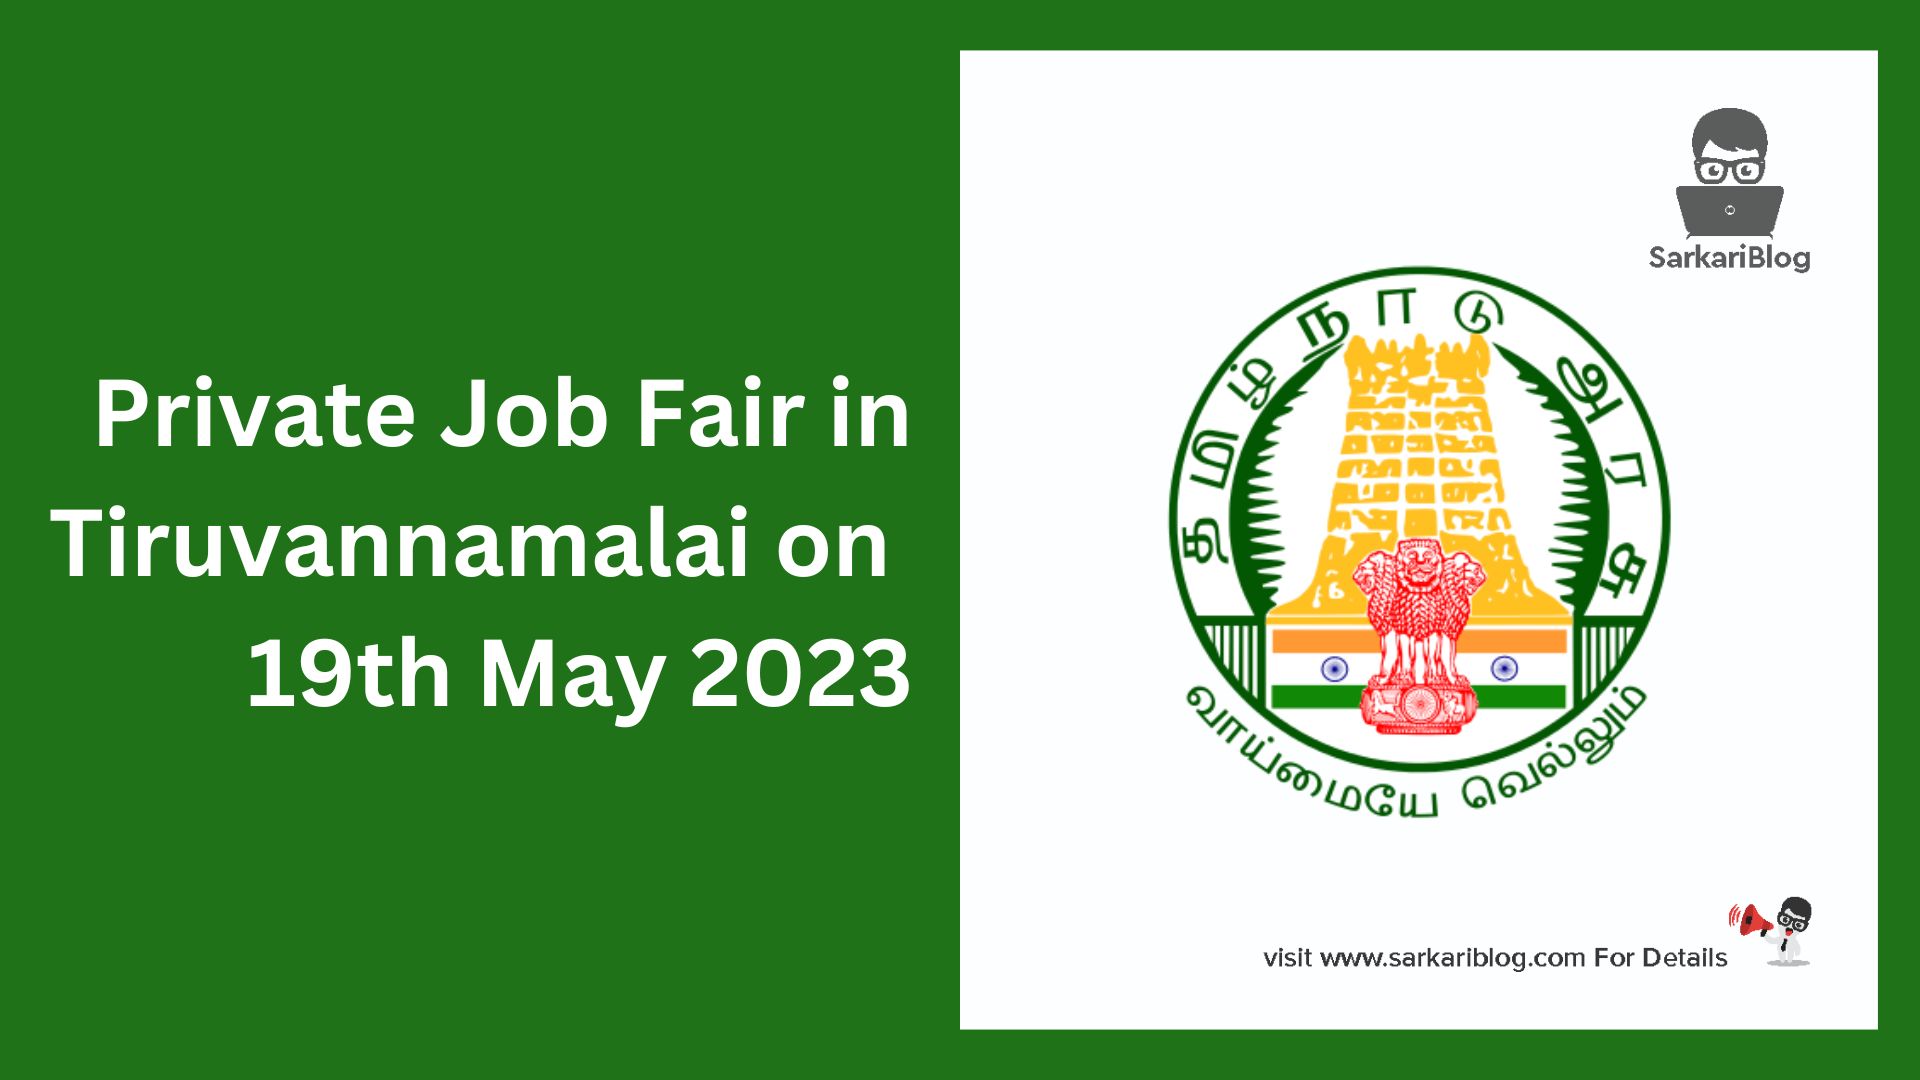 Private Job Fair in Tiruvannamalai on 19th May 2023